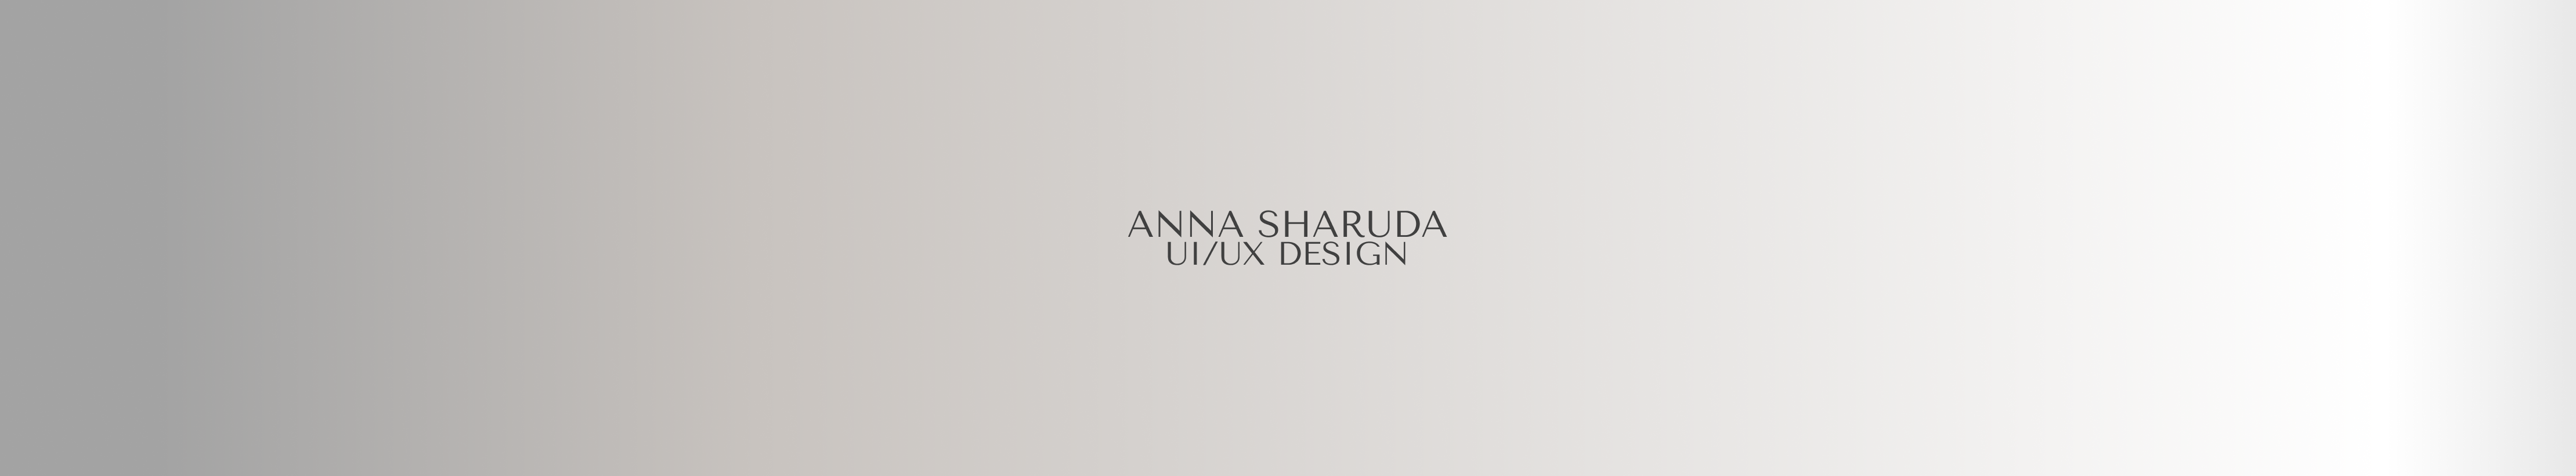 Anna Sharuda's profile banner